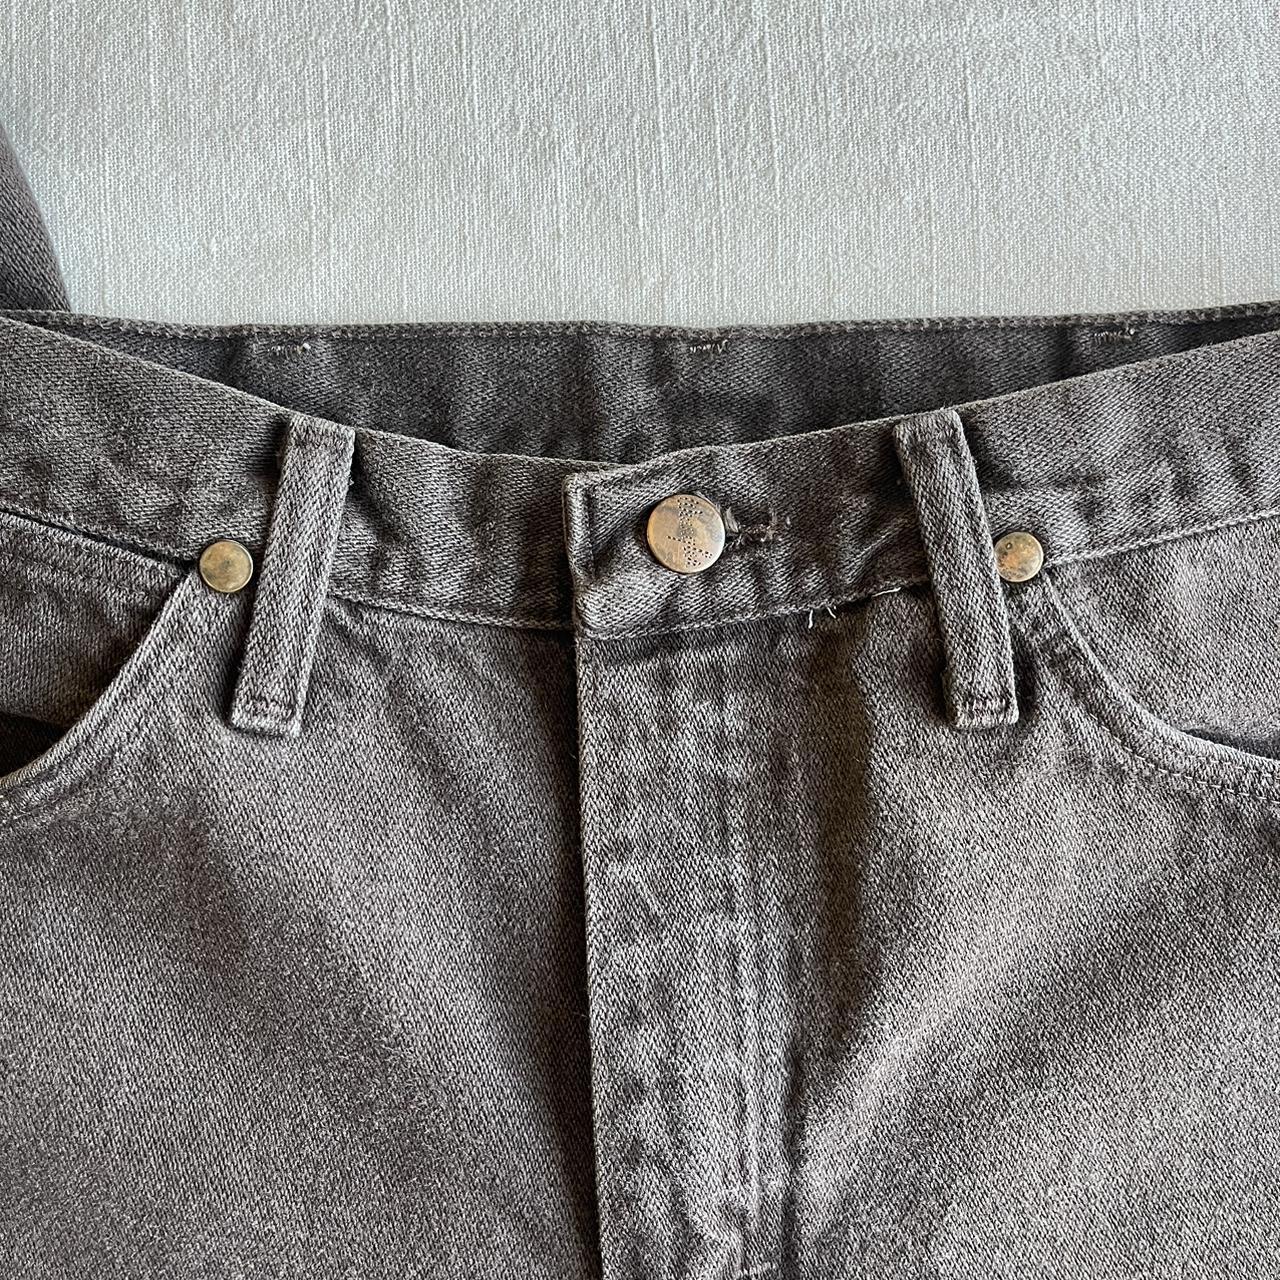 Vintage brown wrangler jeans Great condition, no... - Depop